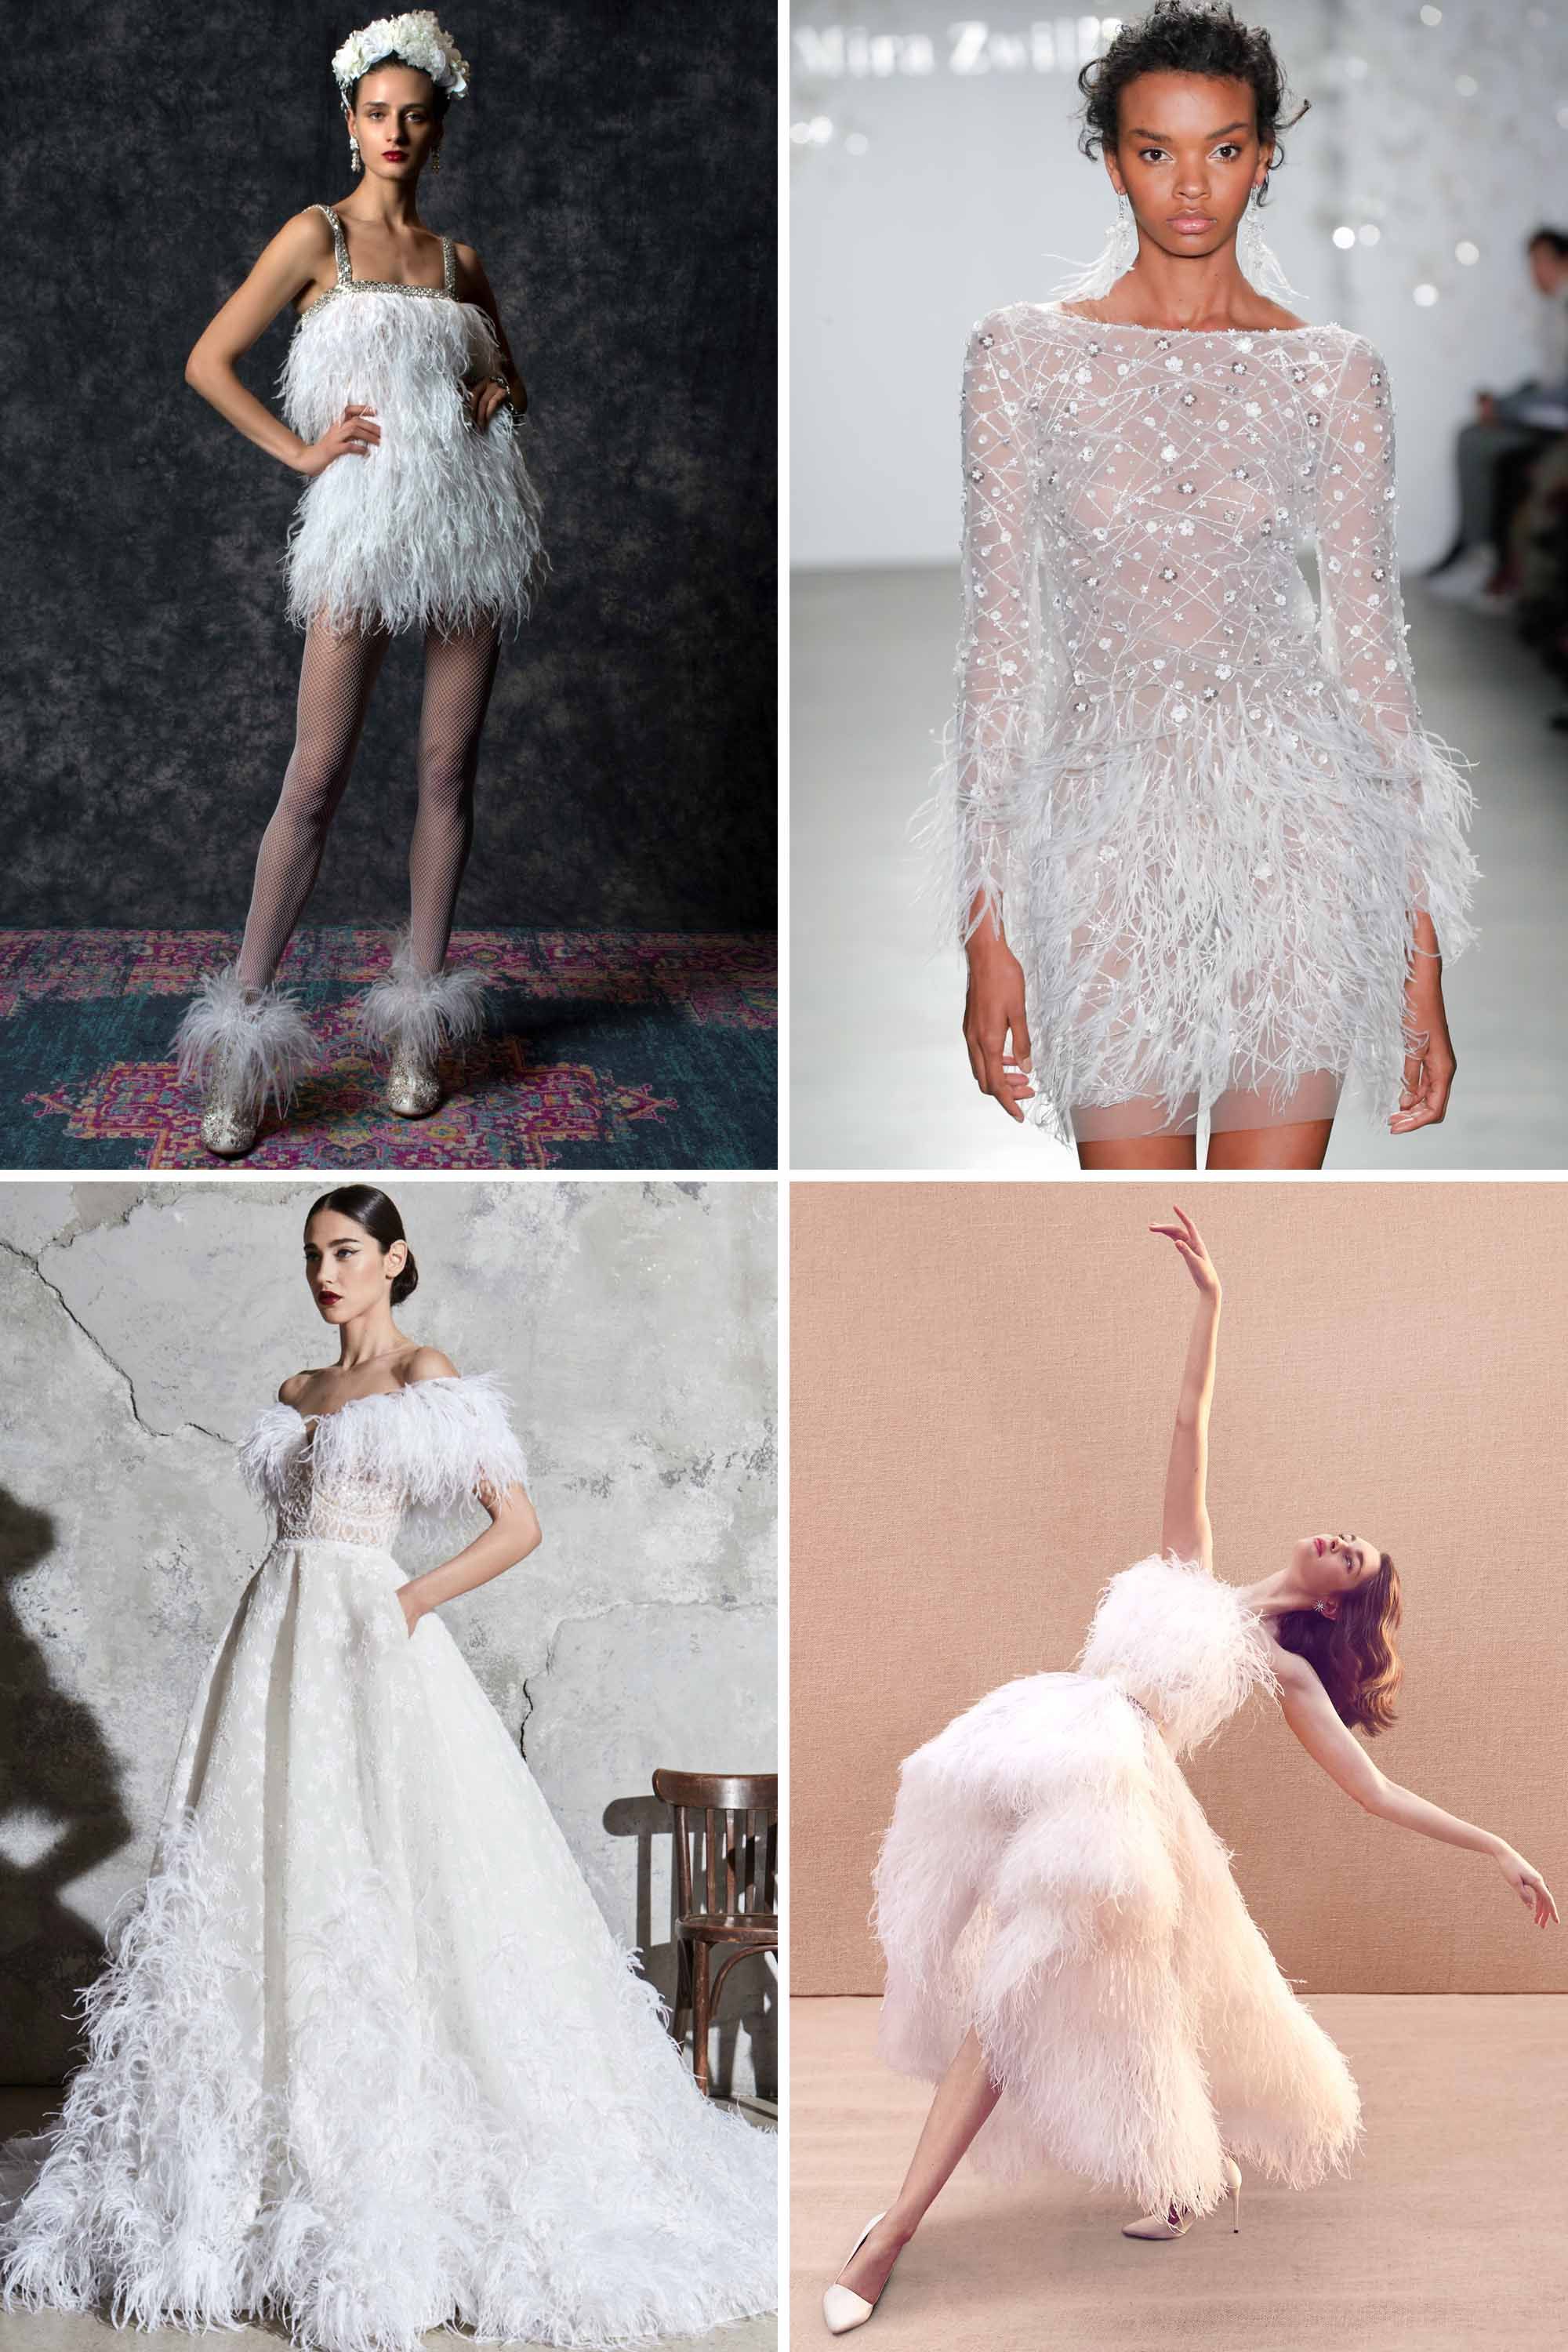 The 15 Best Winter Bridesmaid Dresses